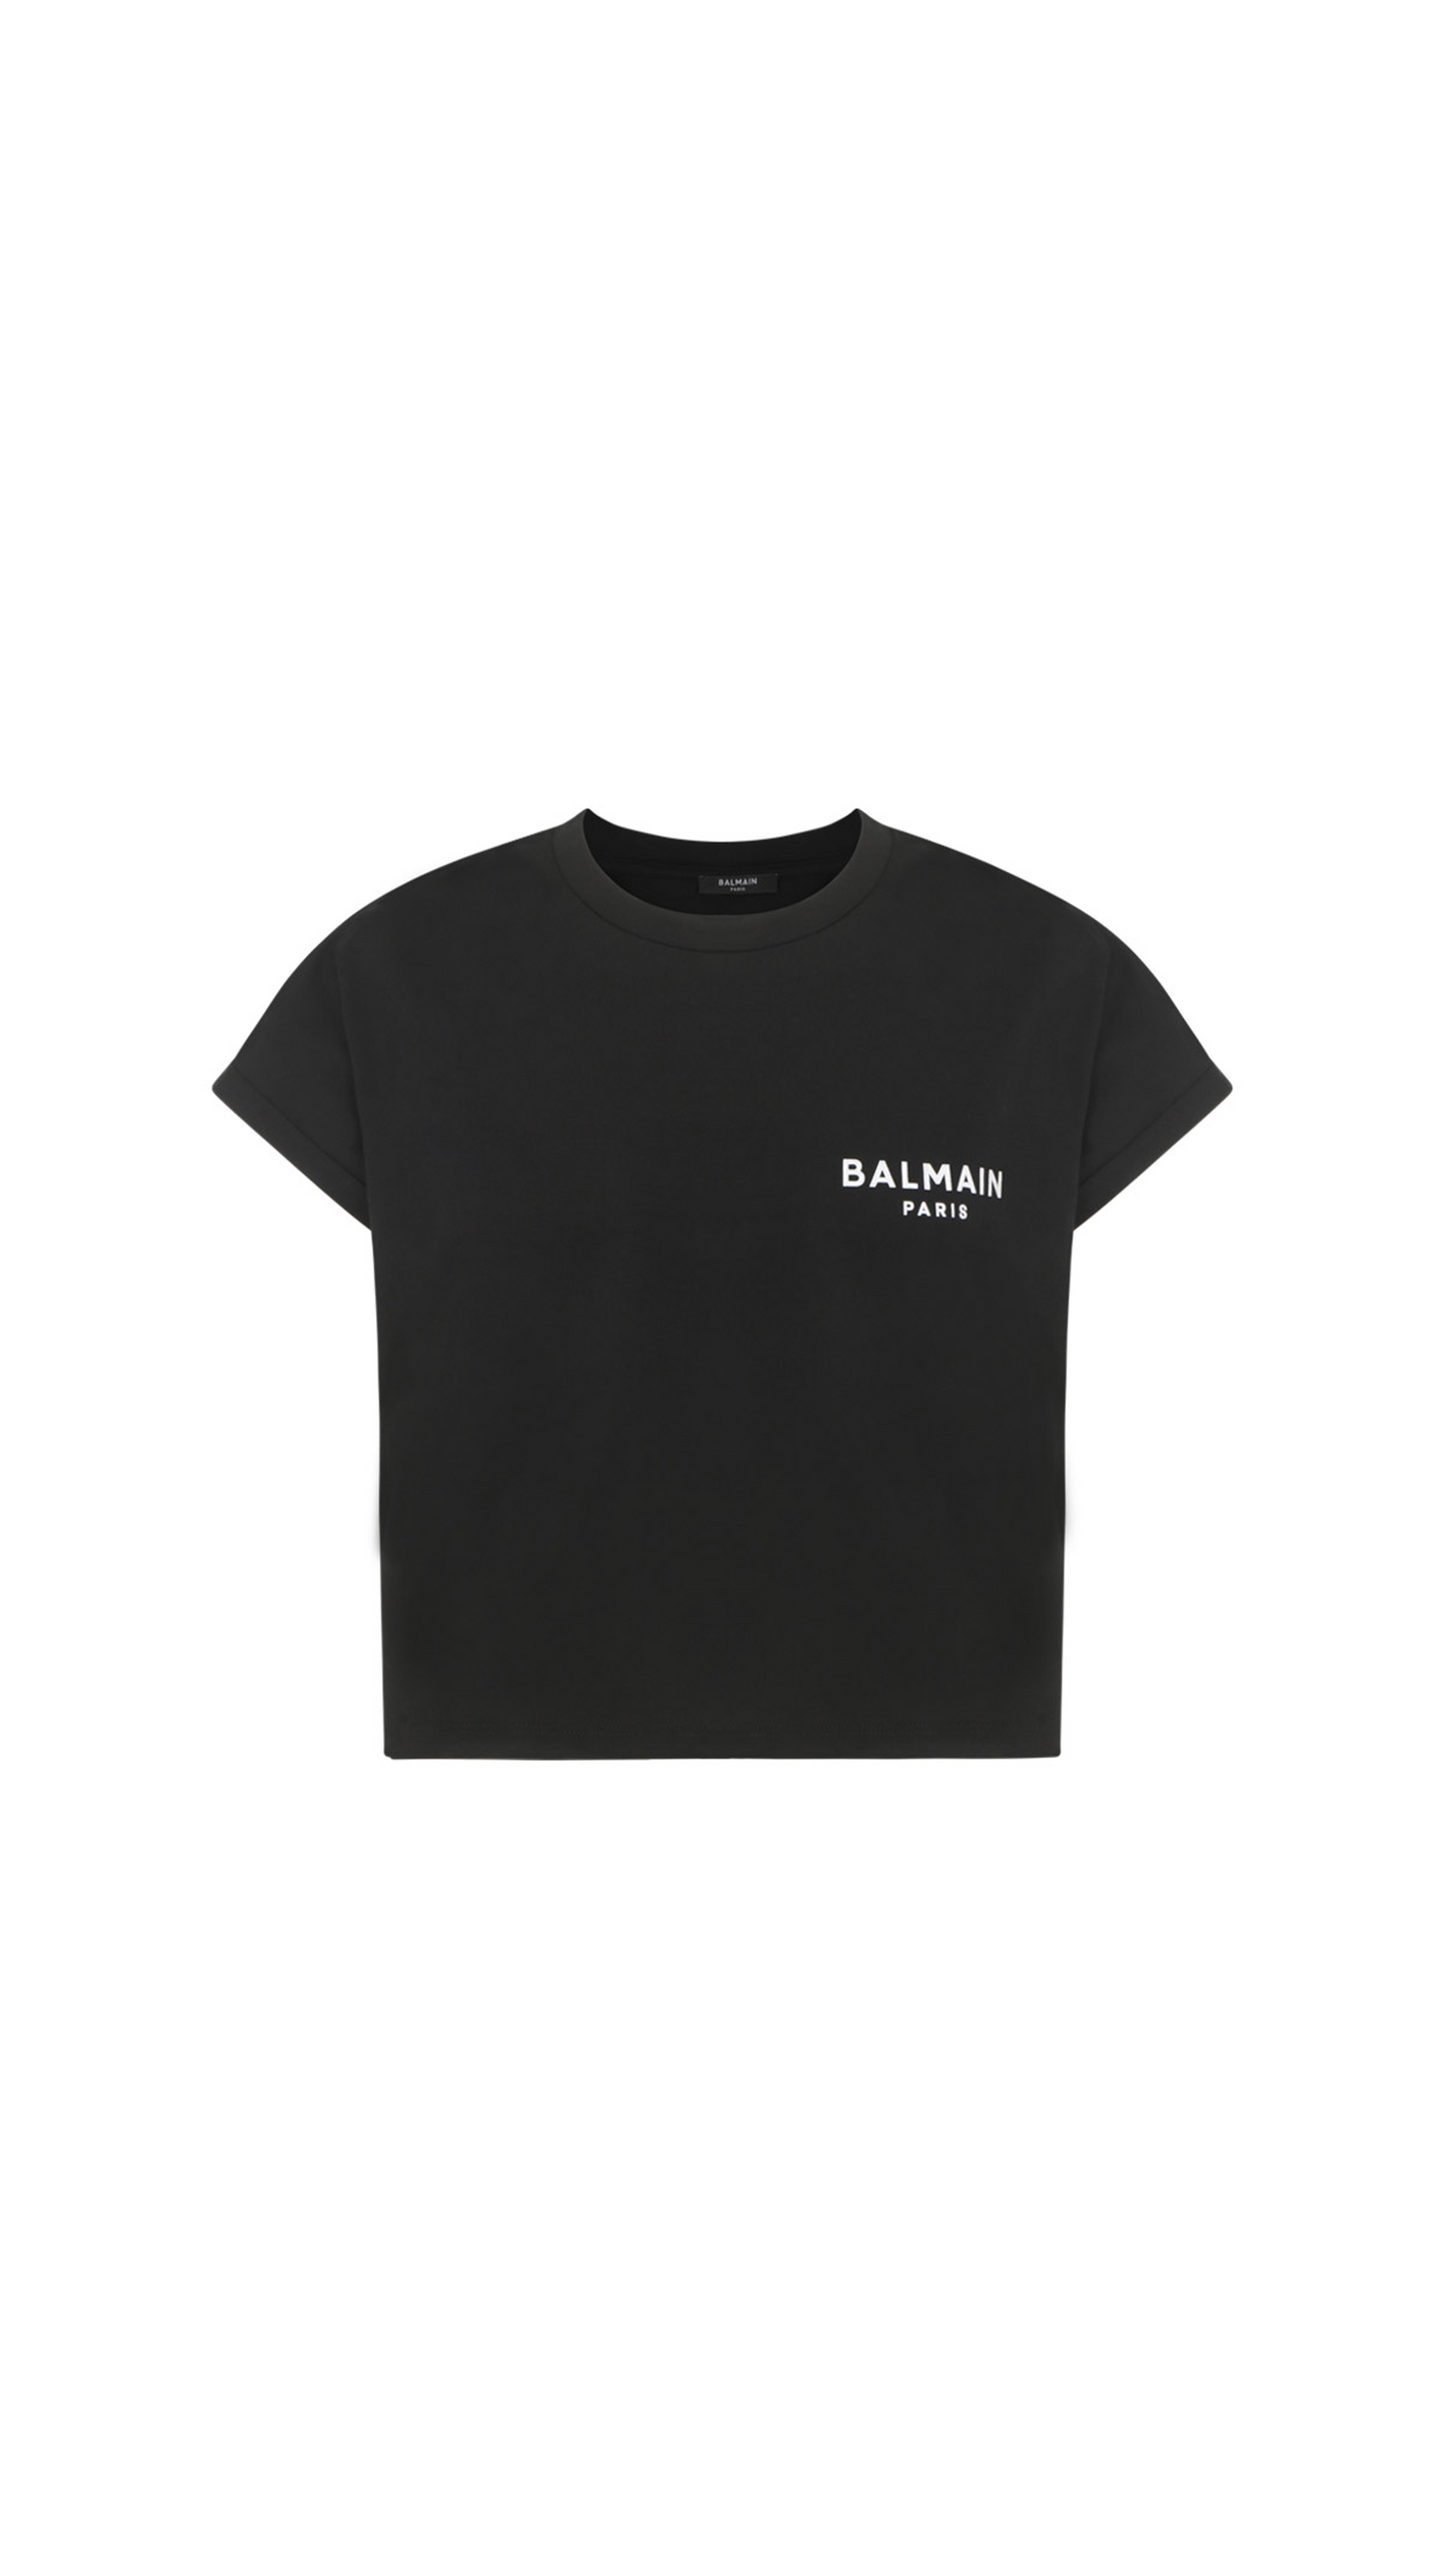 Cotton Short T-Shirt With White Balmain Logo Print - Black.